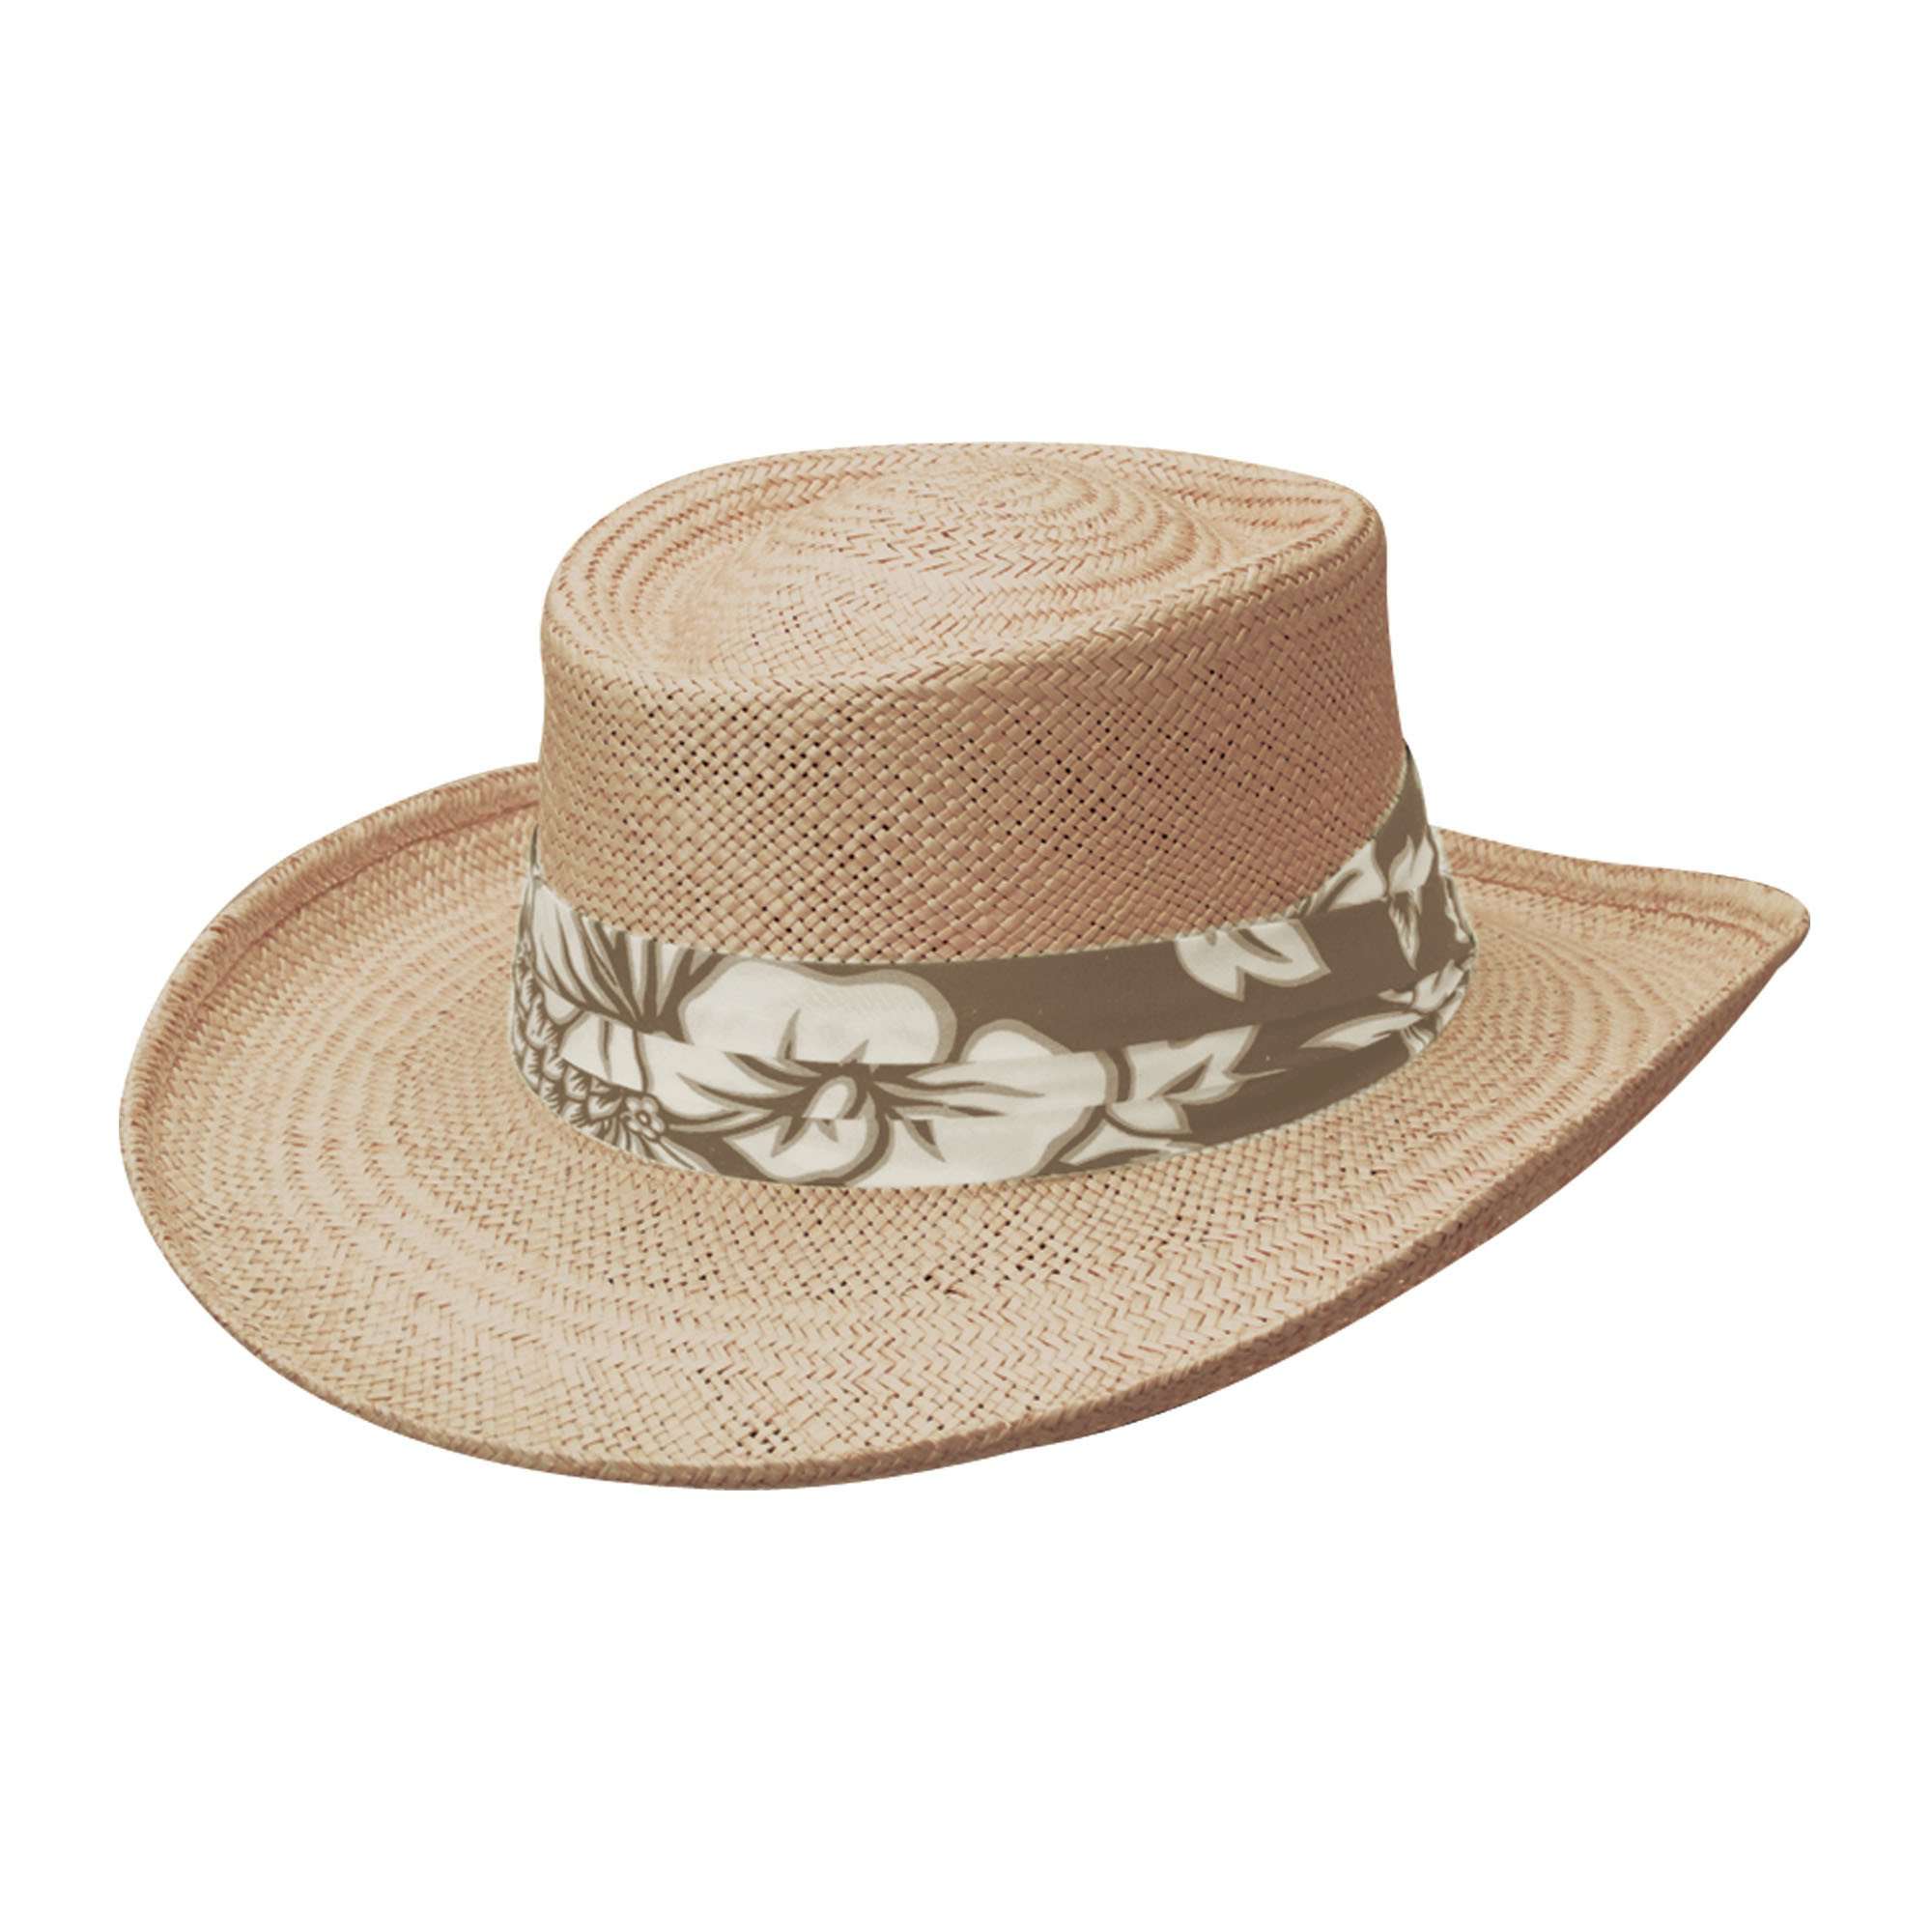 Palm Gambler Hat with Tropical Band - Scala Hats for Men Gambler Hat Scala Hats MS352osKHM Khaki S/M 